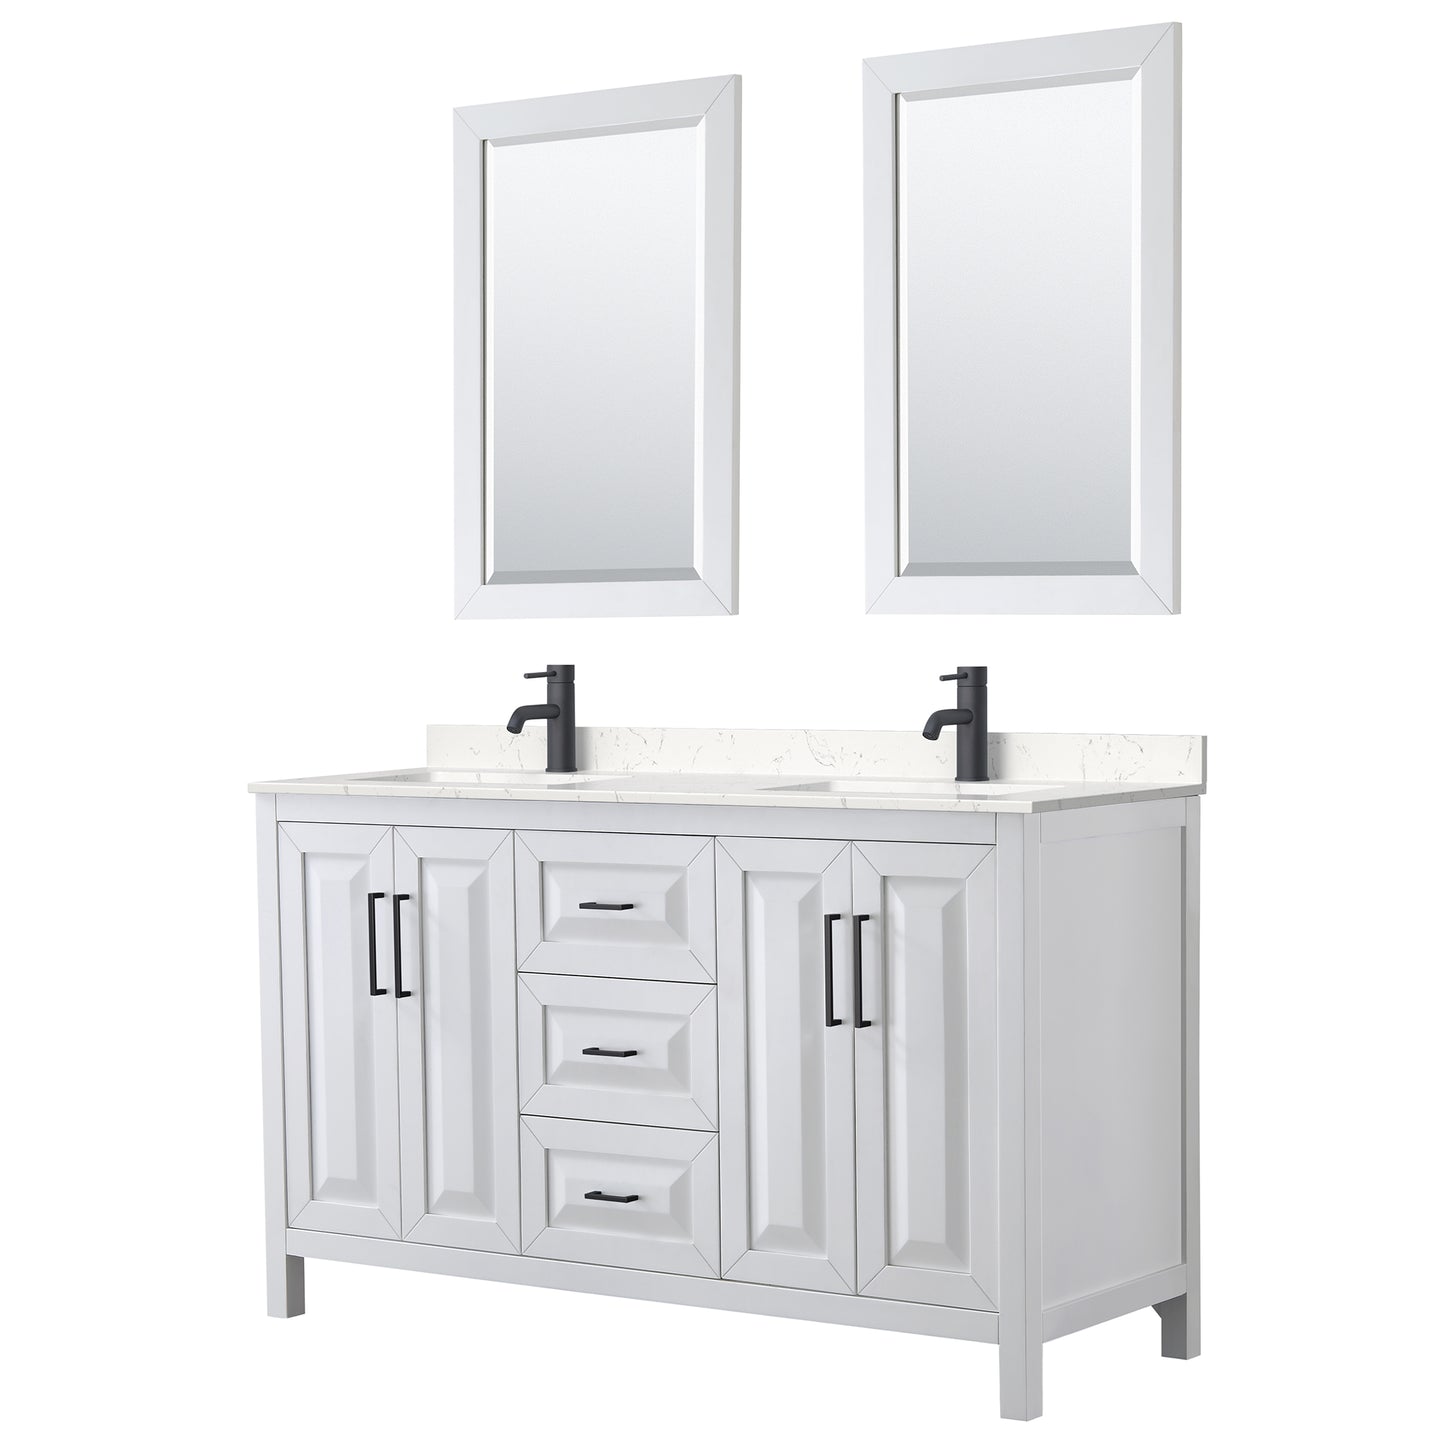 Wyndham Daria 60 Inch Double Bathroom Vanity Light-Vein Carrara Cultured Marble Countertop, Undermount Square Sinks in Matte Black Trim with 24 Inch Mirrors - Luxe Bathroom Vanities